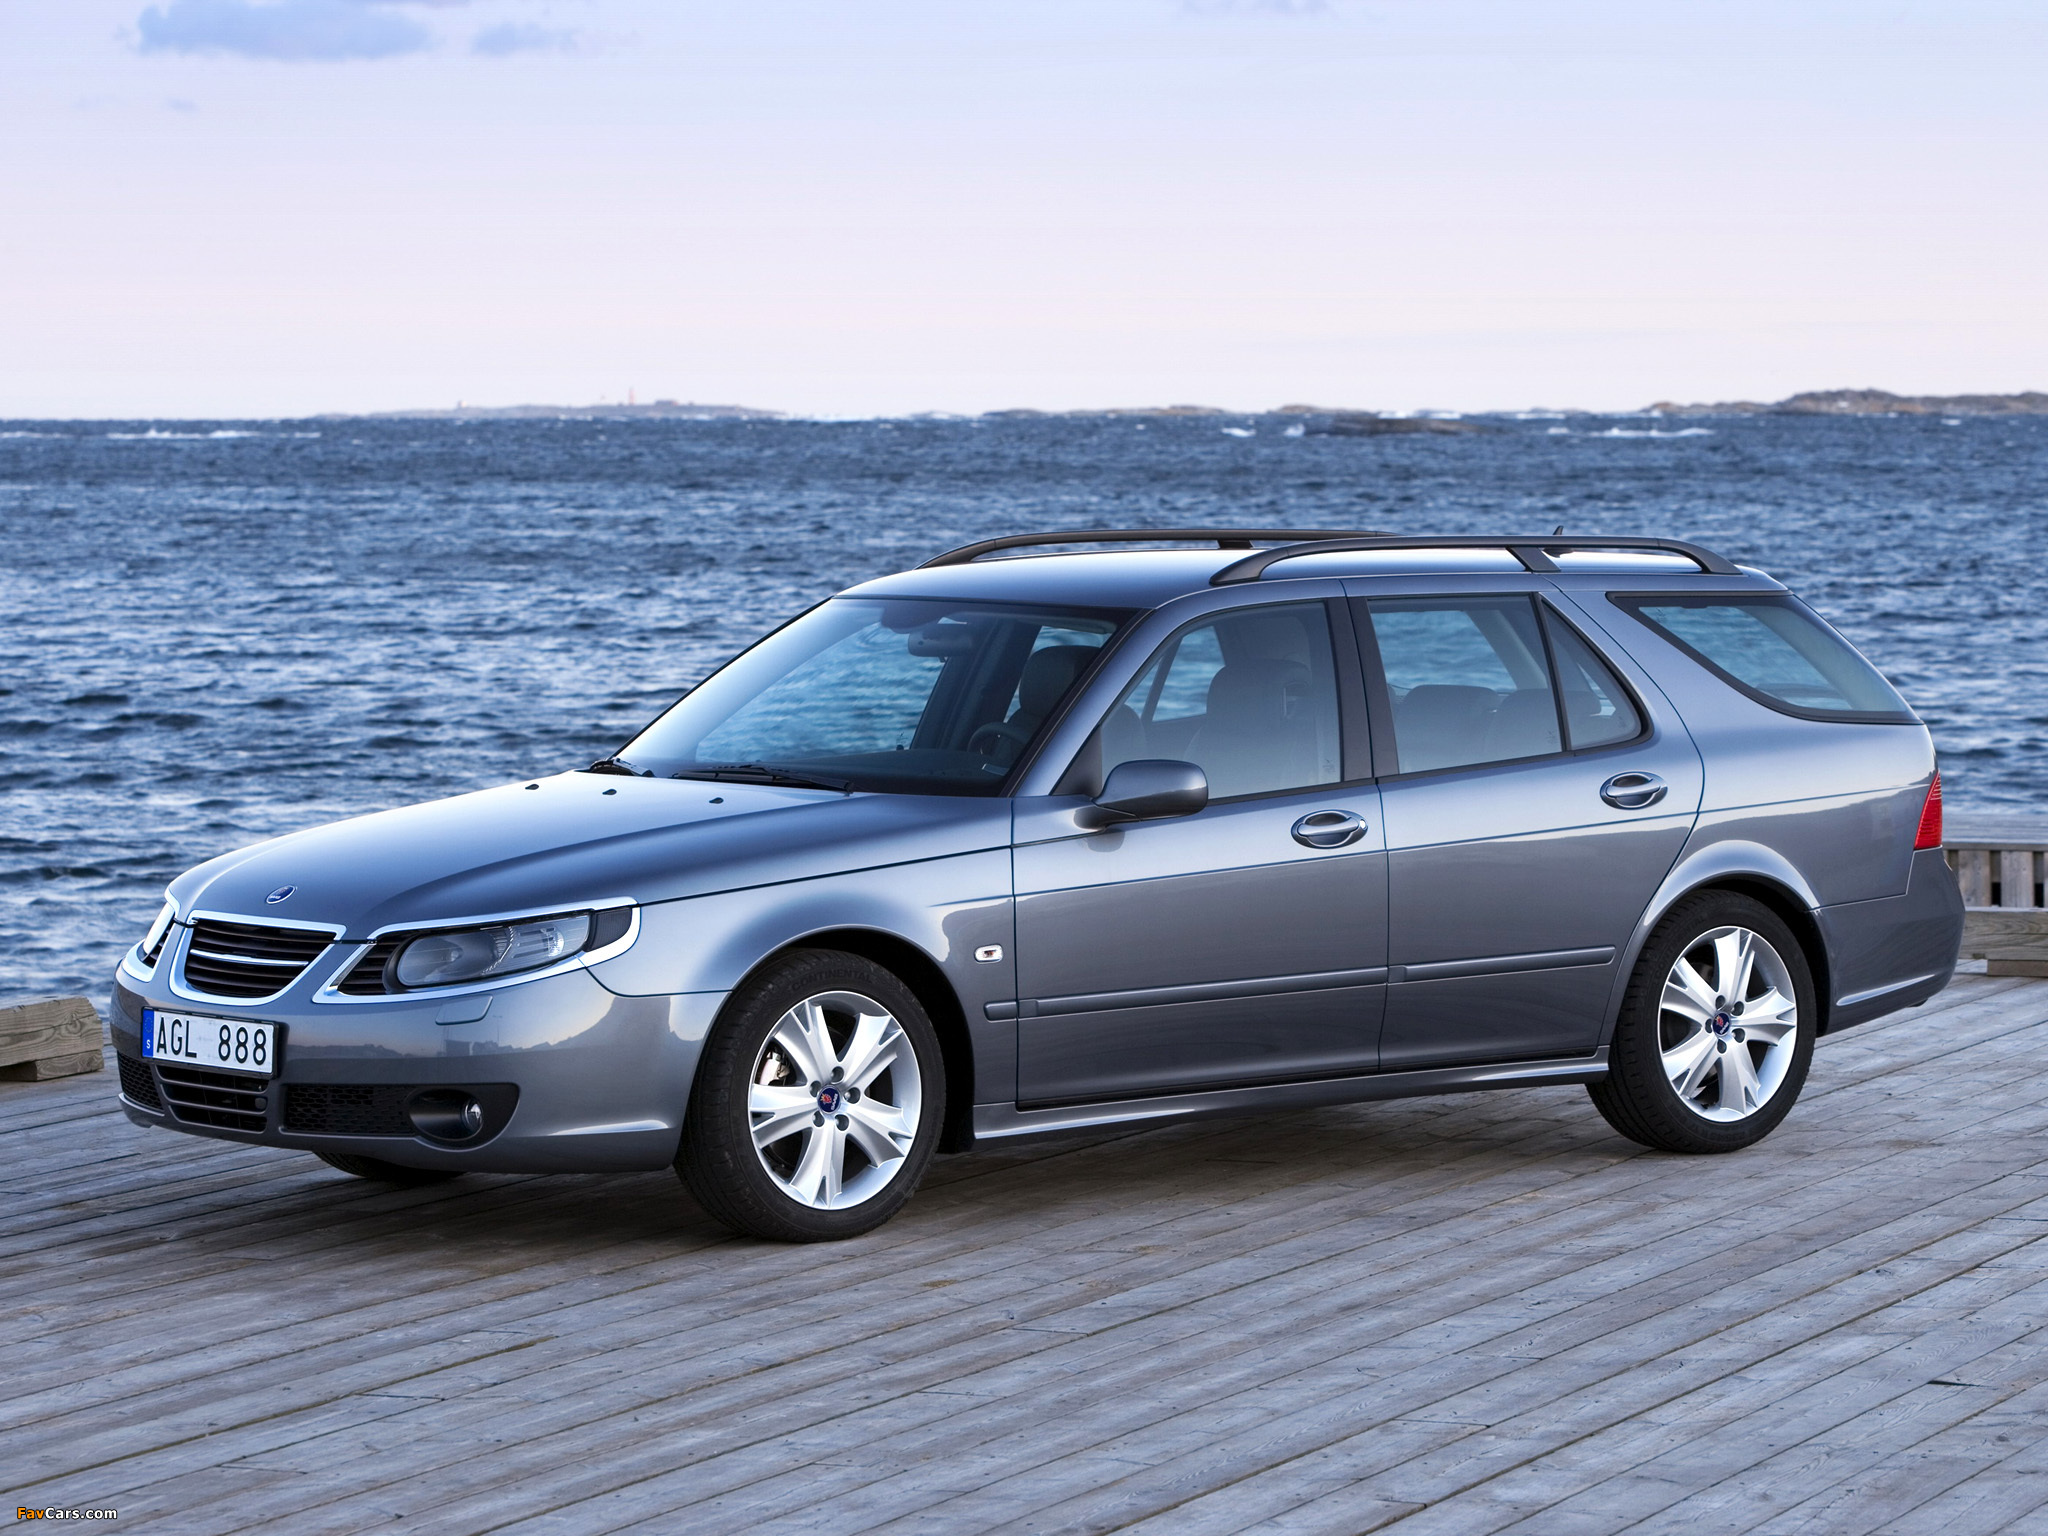 Saab 9 купить. Saab 9-5 универсал. Saab 9-5 универсал 2008. Saab 9-5 Aero 2006. Saab 9-5 2005.